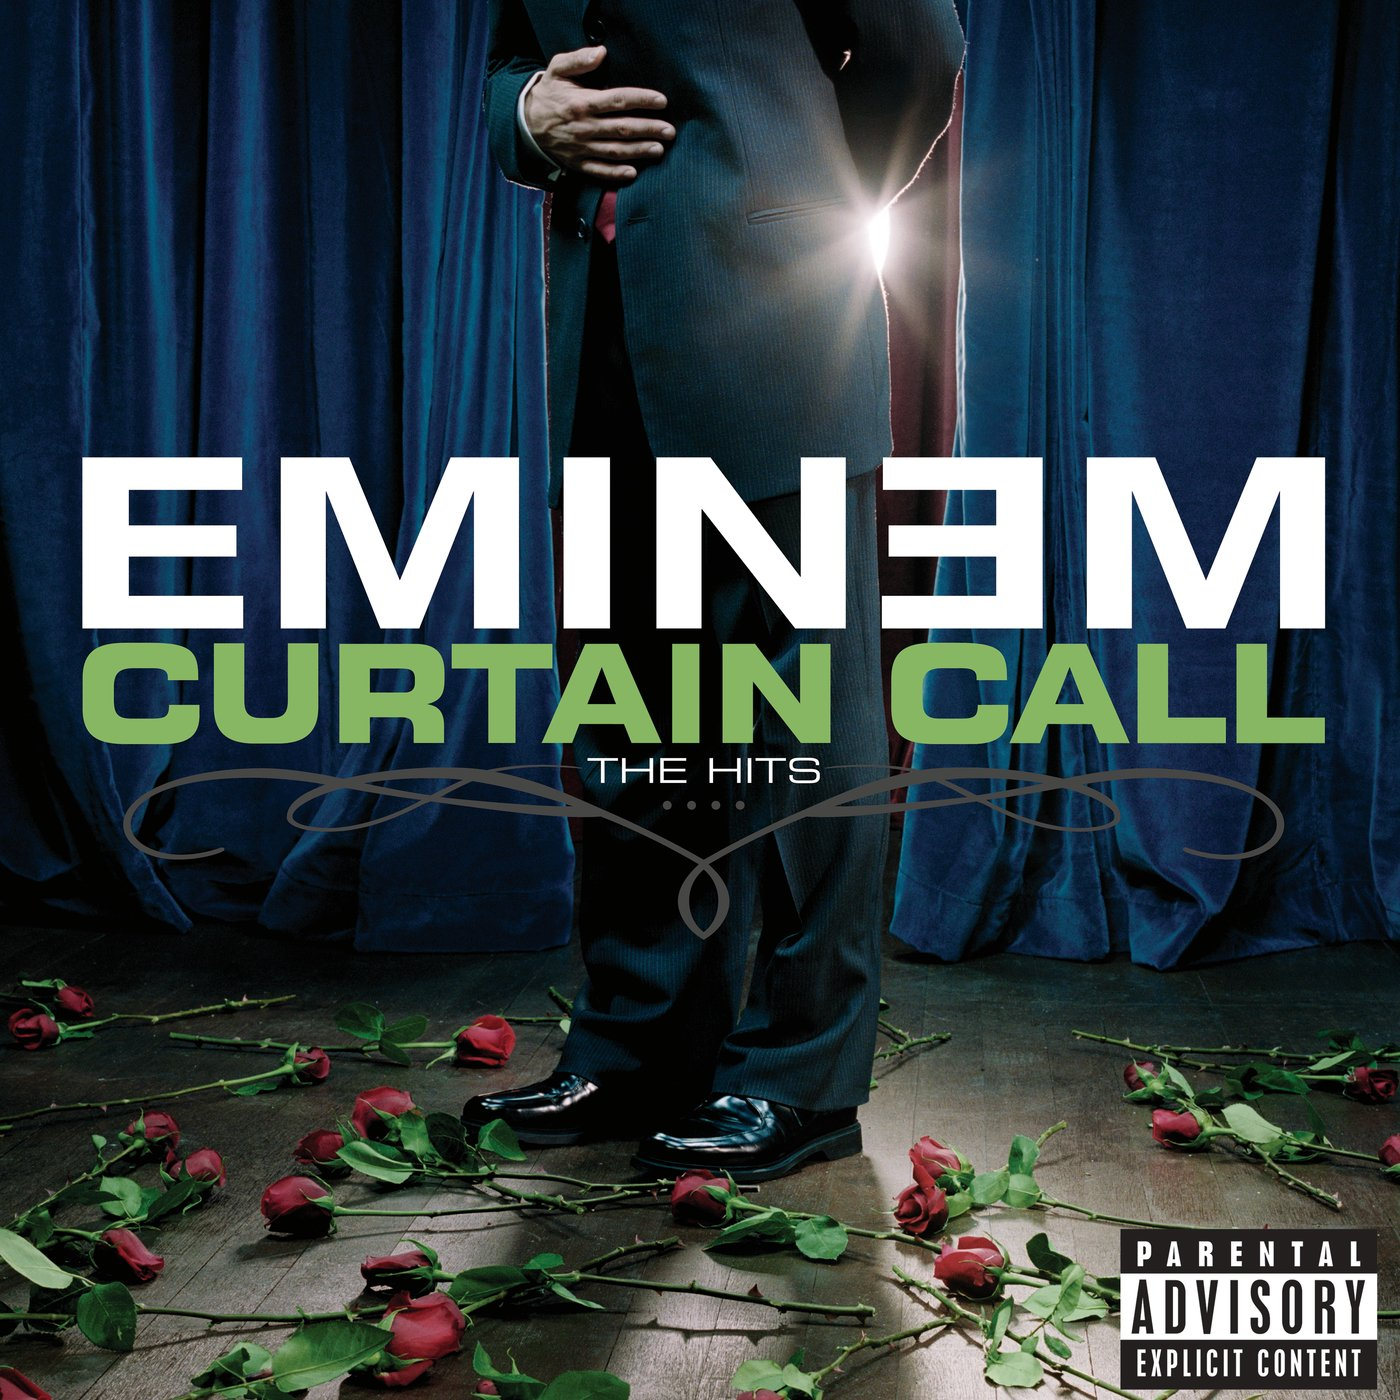 Eminem - When I'm Gone